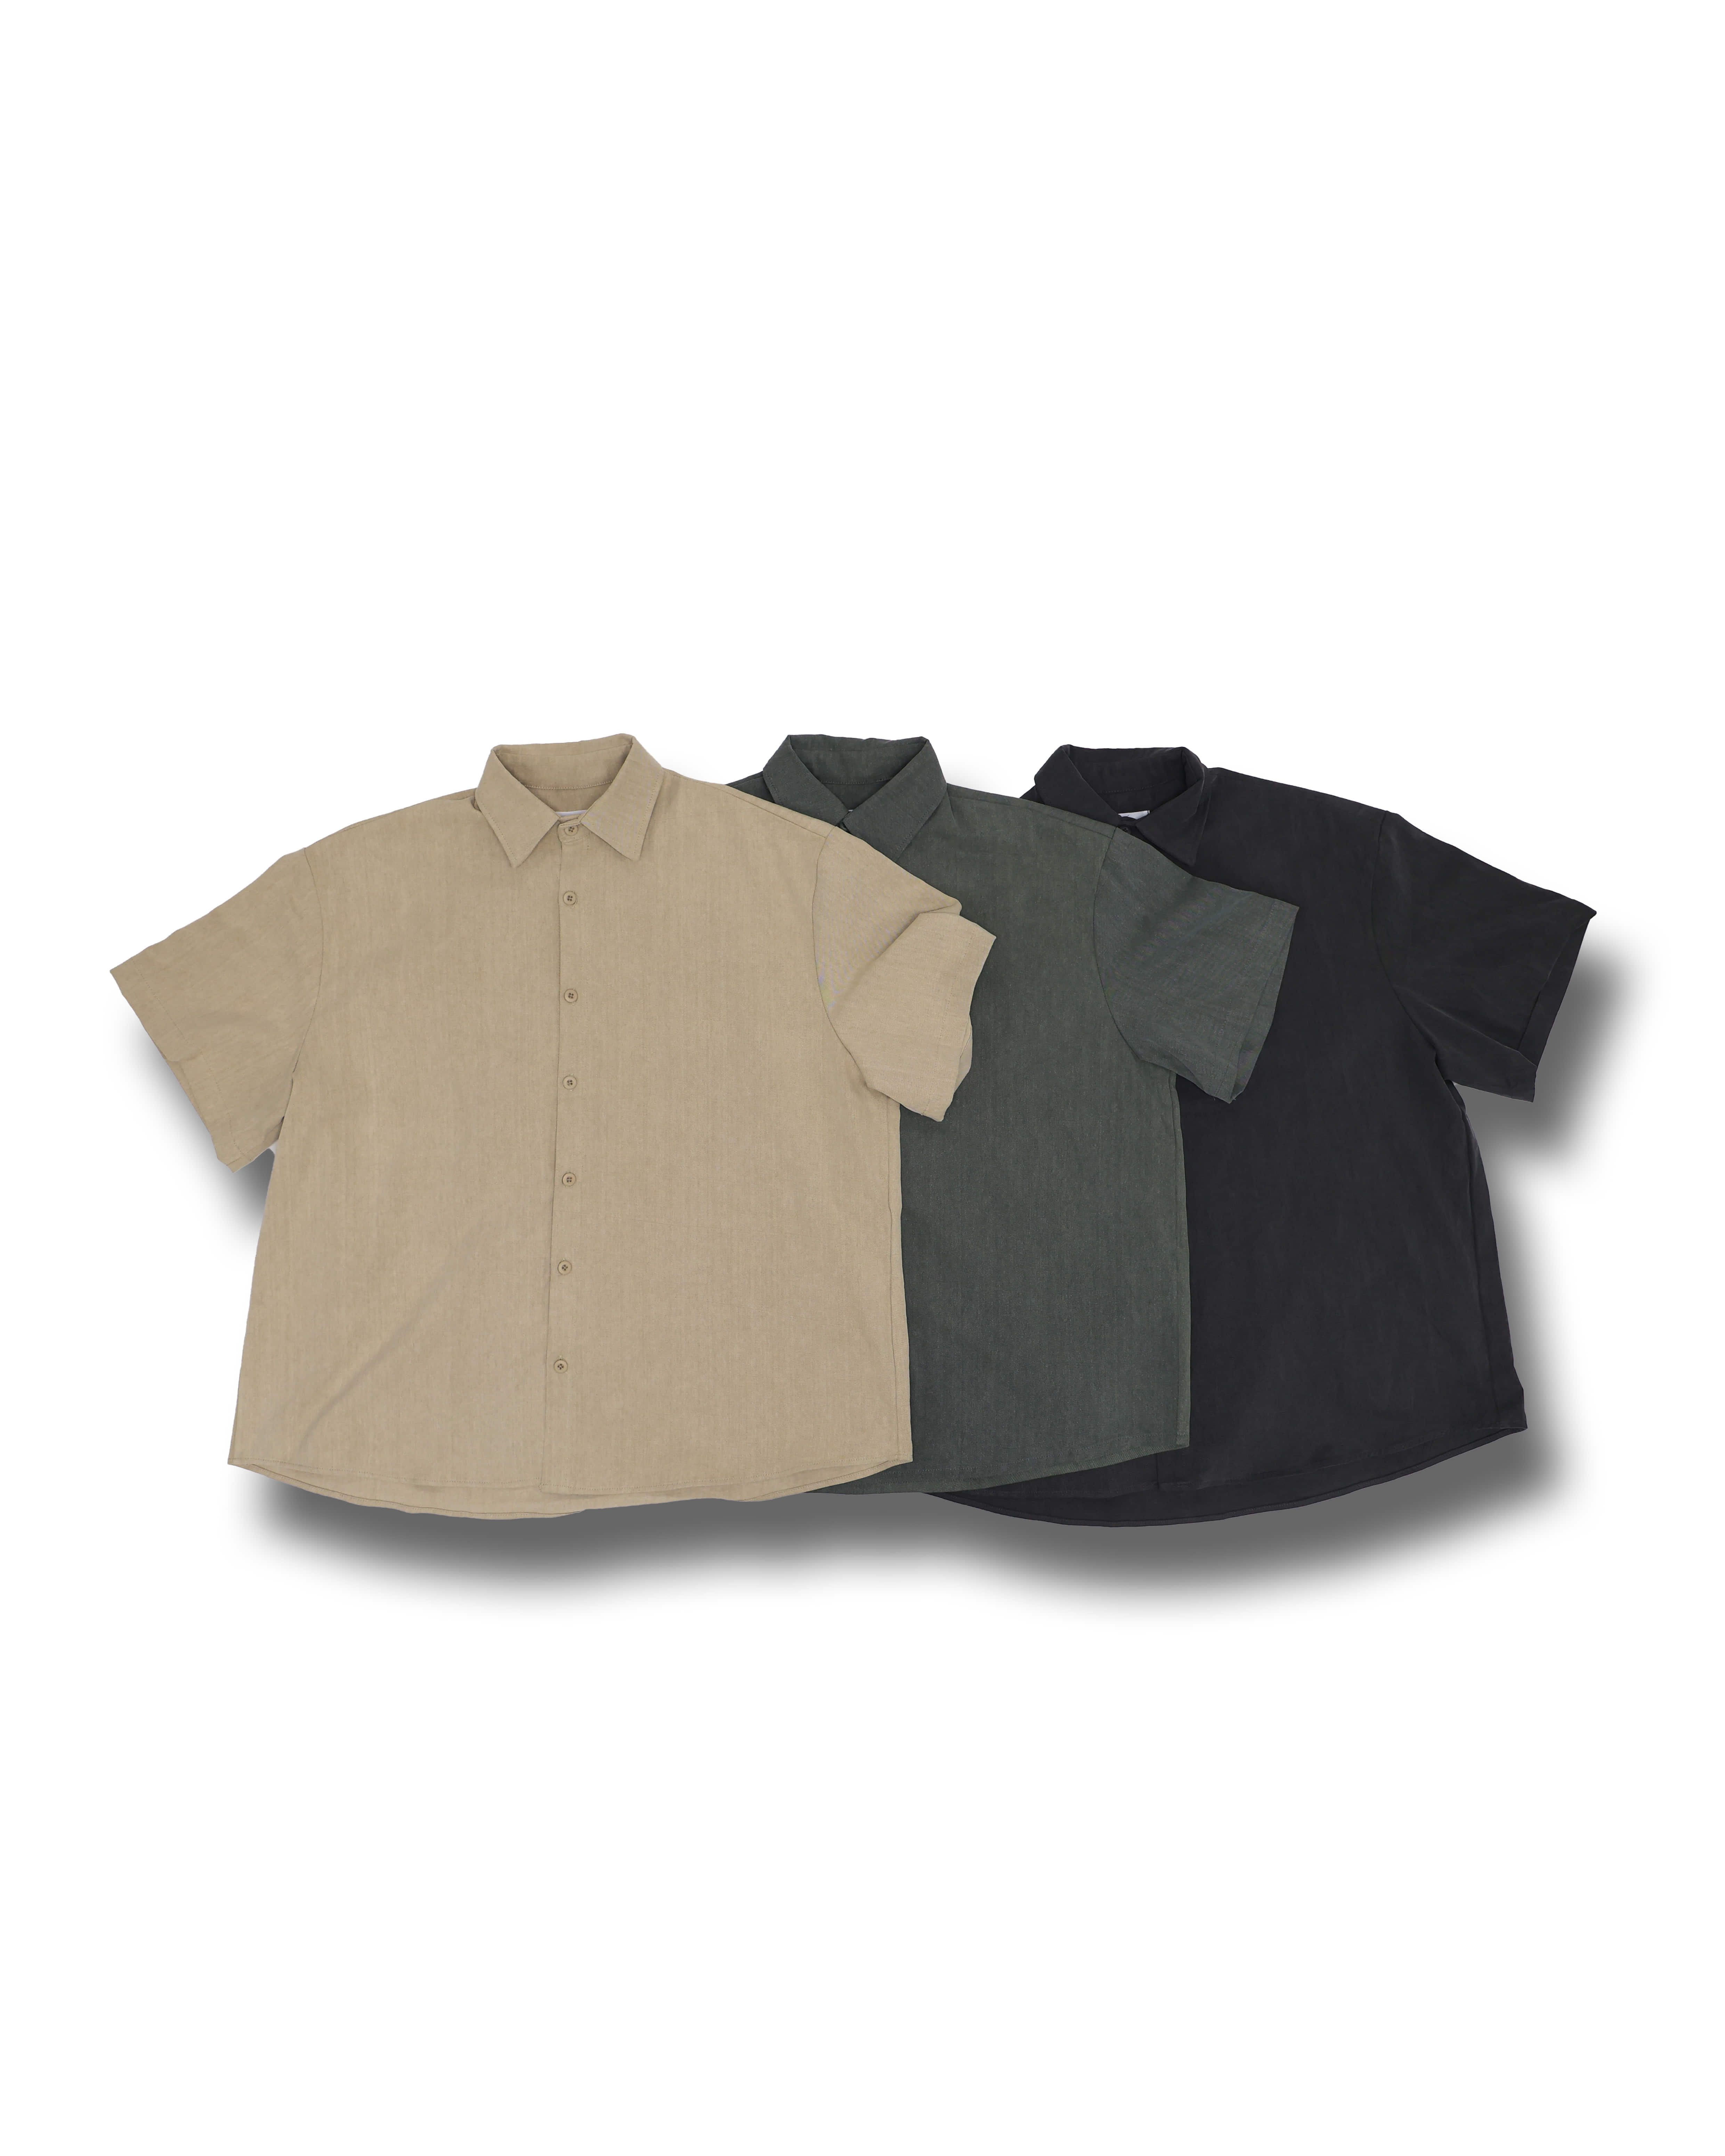 Over-Mid Pigments Half Shirts (Charcoal/Khaki/Beige)